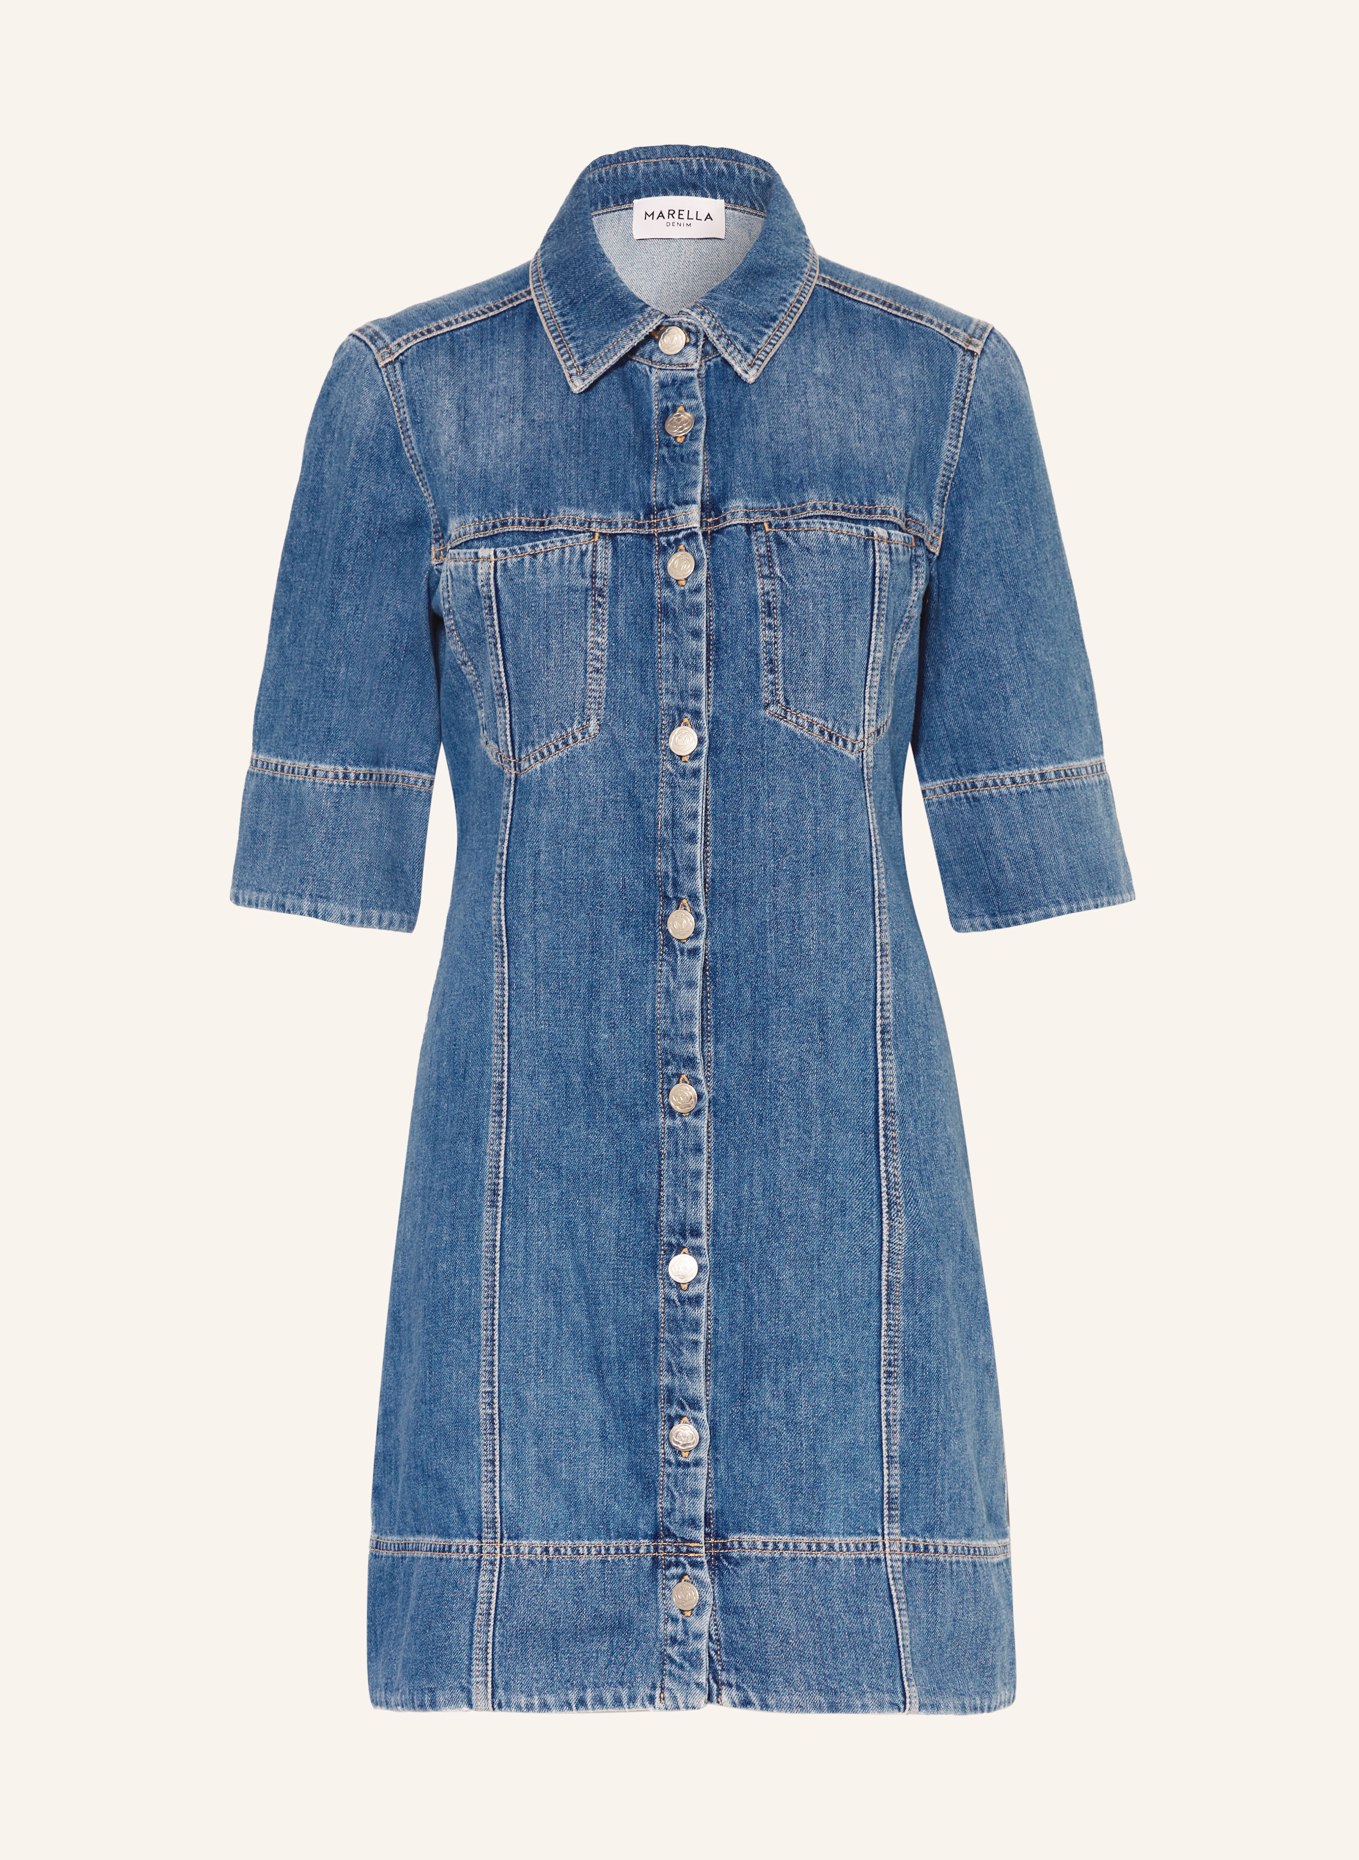 MARELLA Jeanskleid, Farbe: 001  blue jeans (Bild 1)